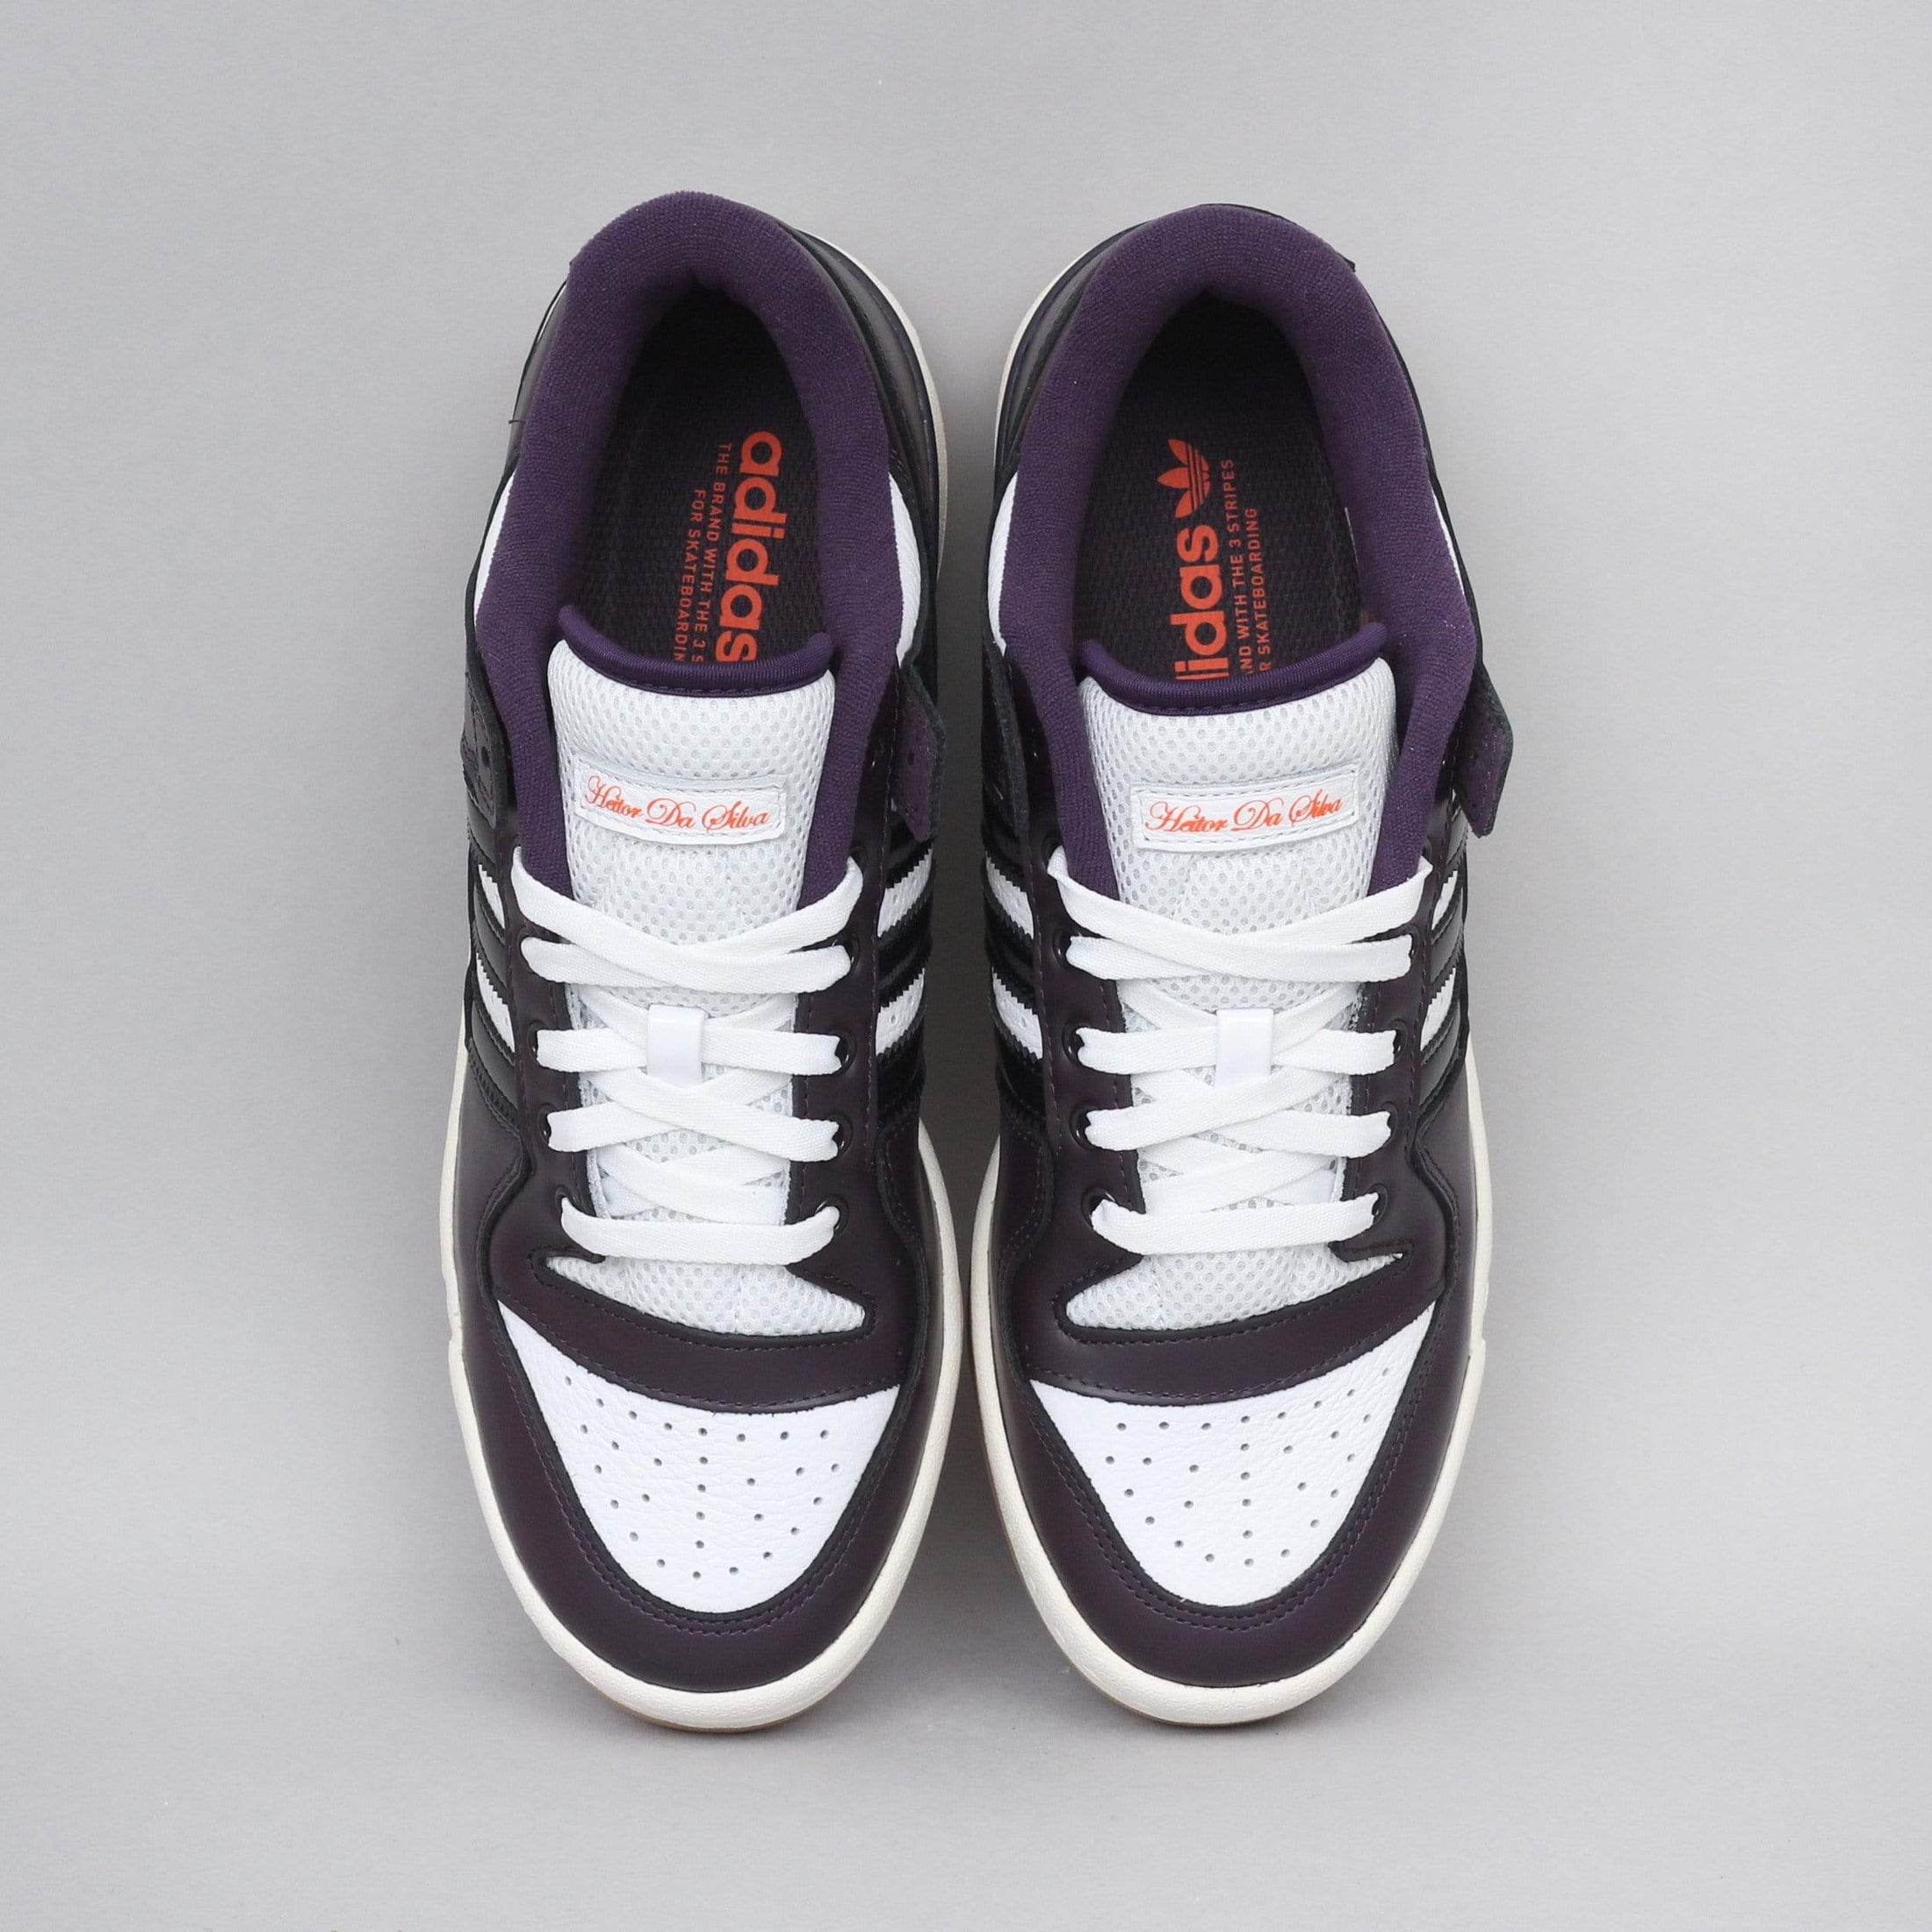 adidas Heitor Forum 84 Low Advance Shoes Noble Purple / Core Black / Footwear White